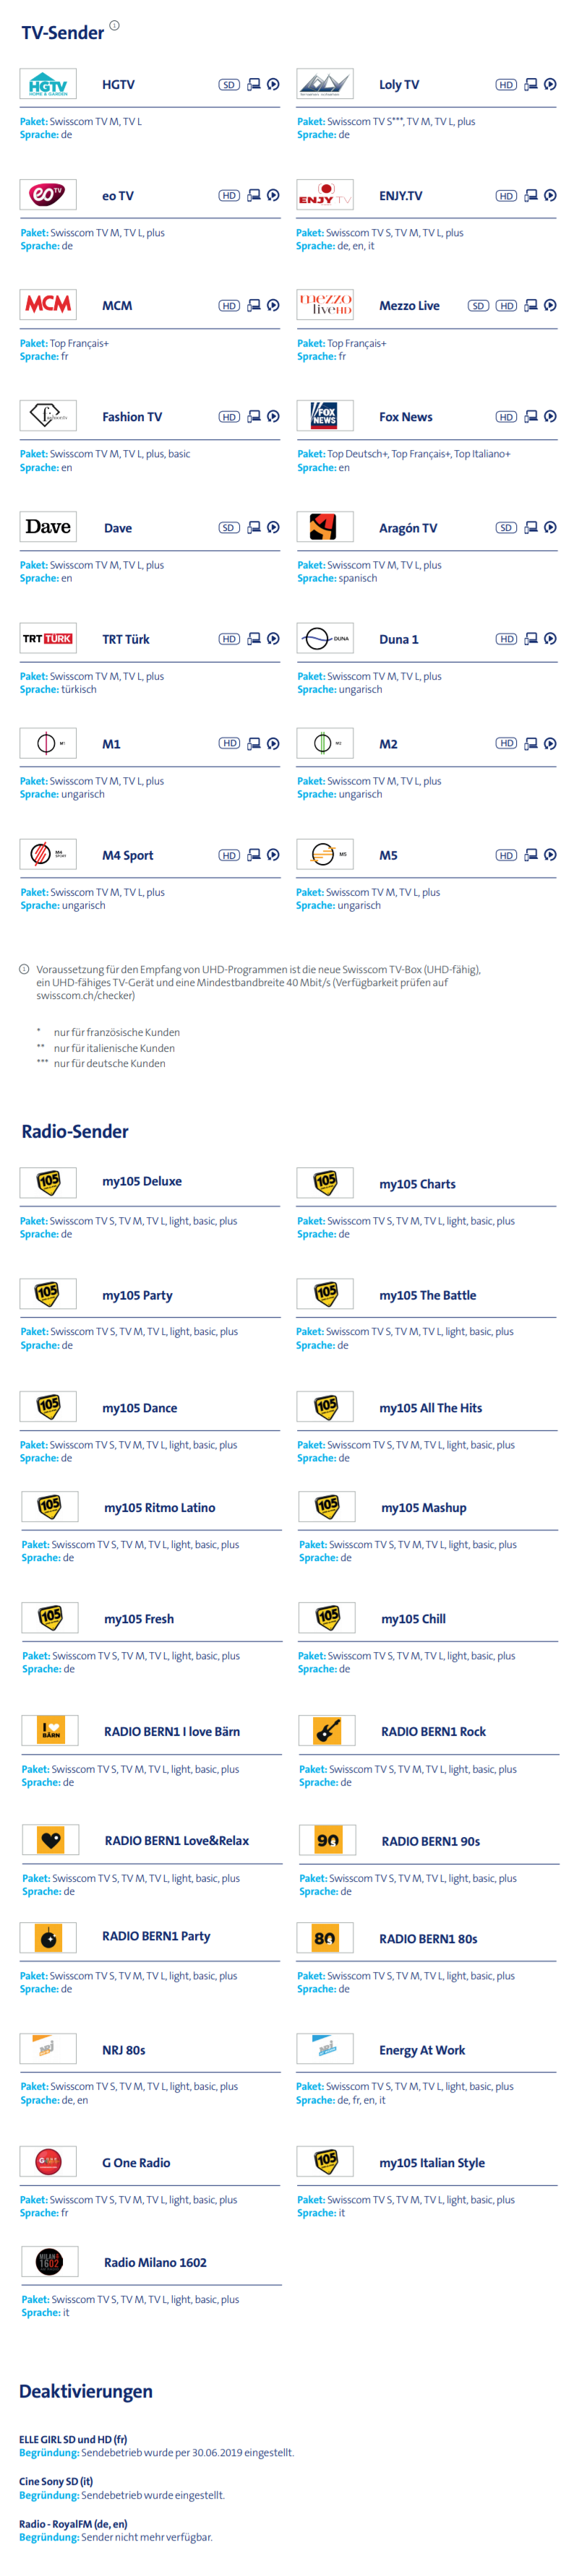 Neue Radio_Sender auf Swisscom TV_neu.png